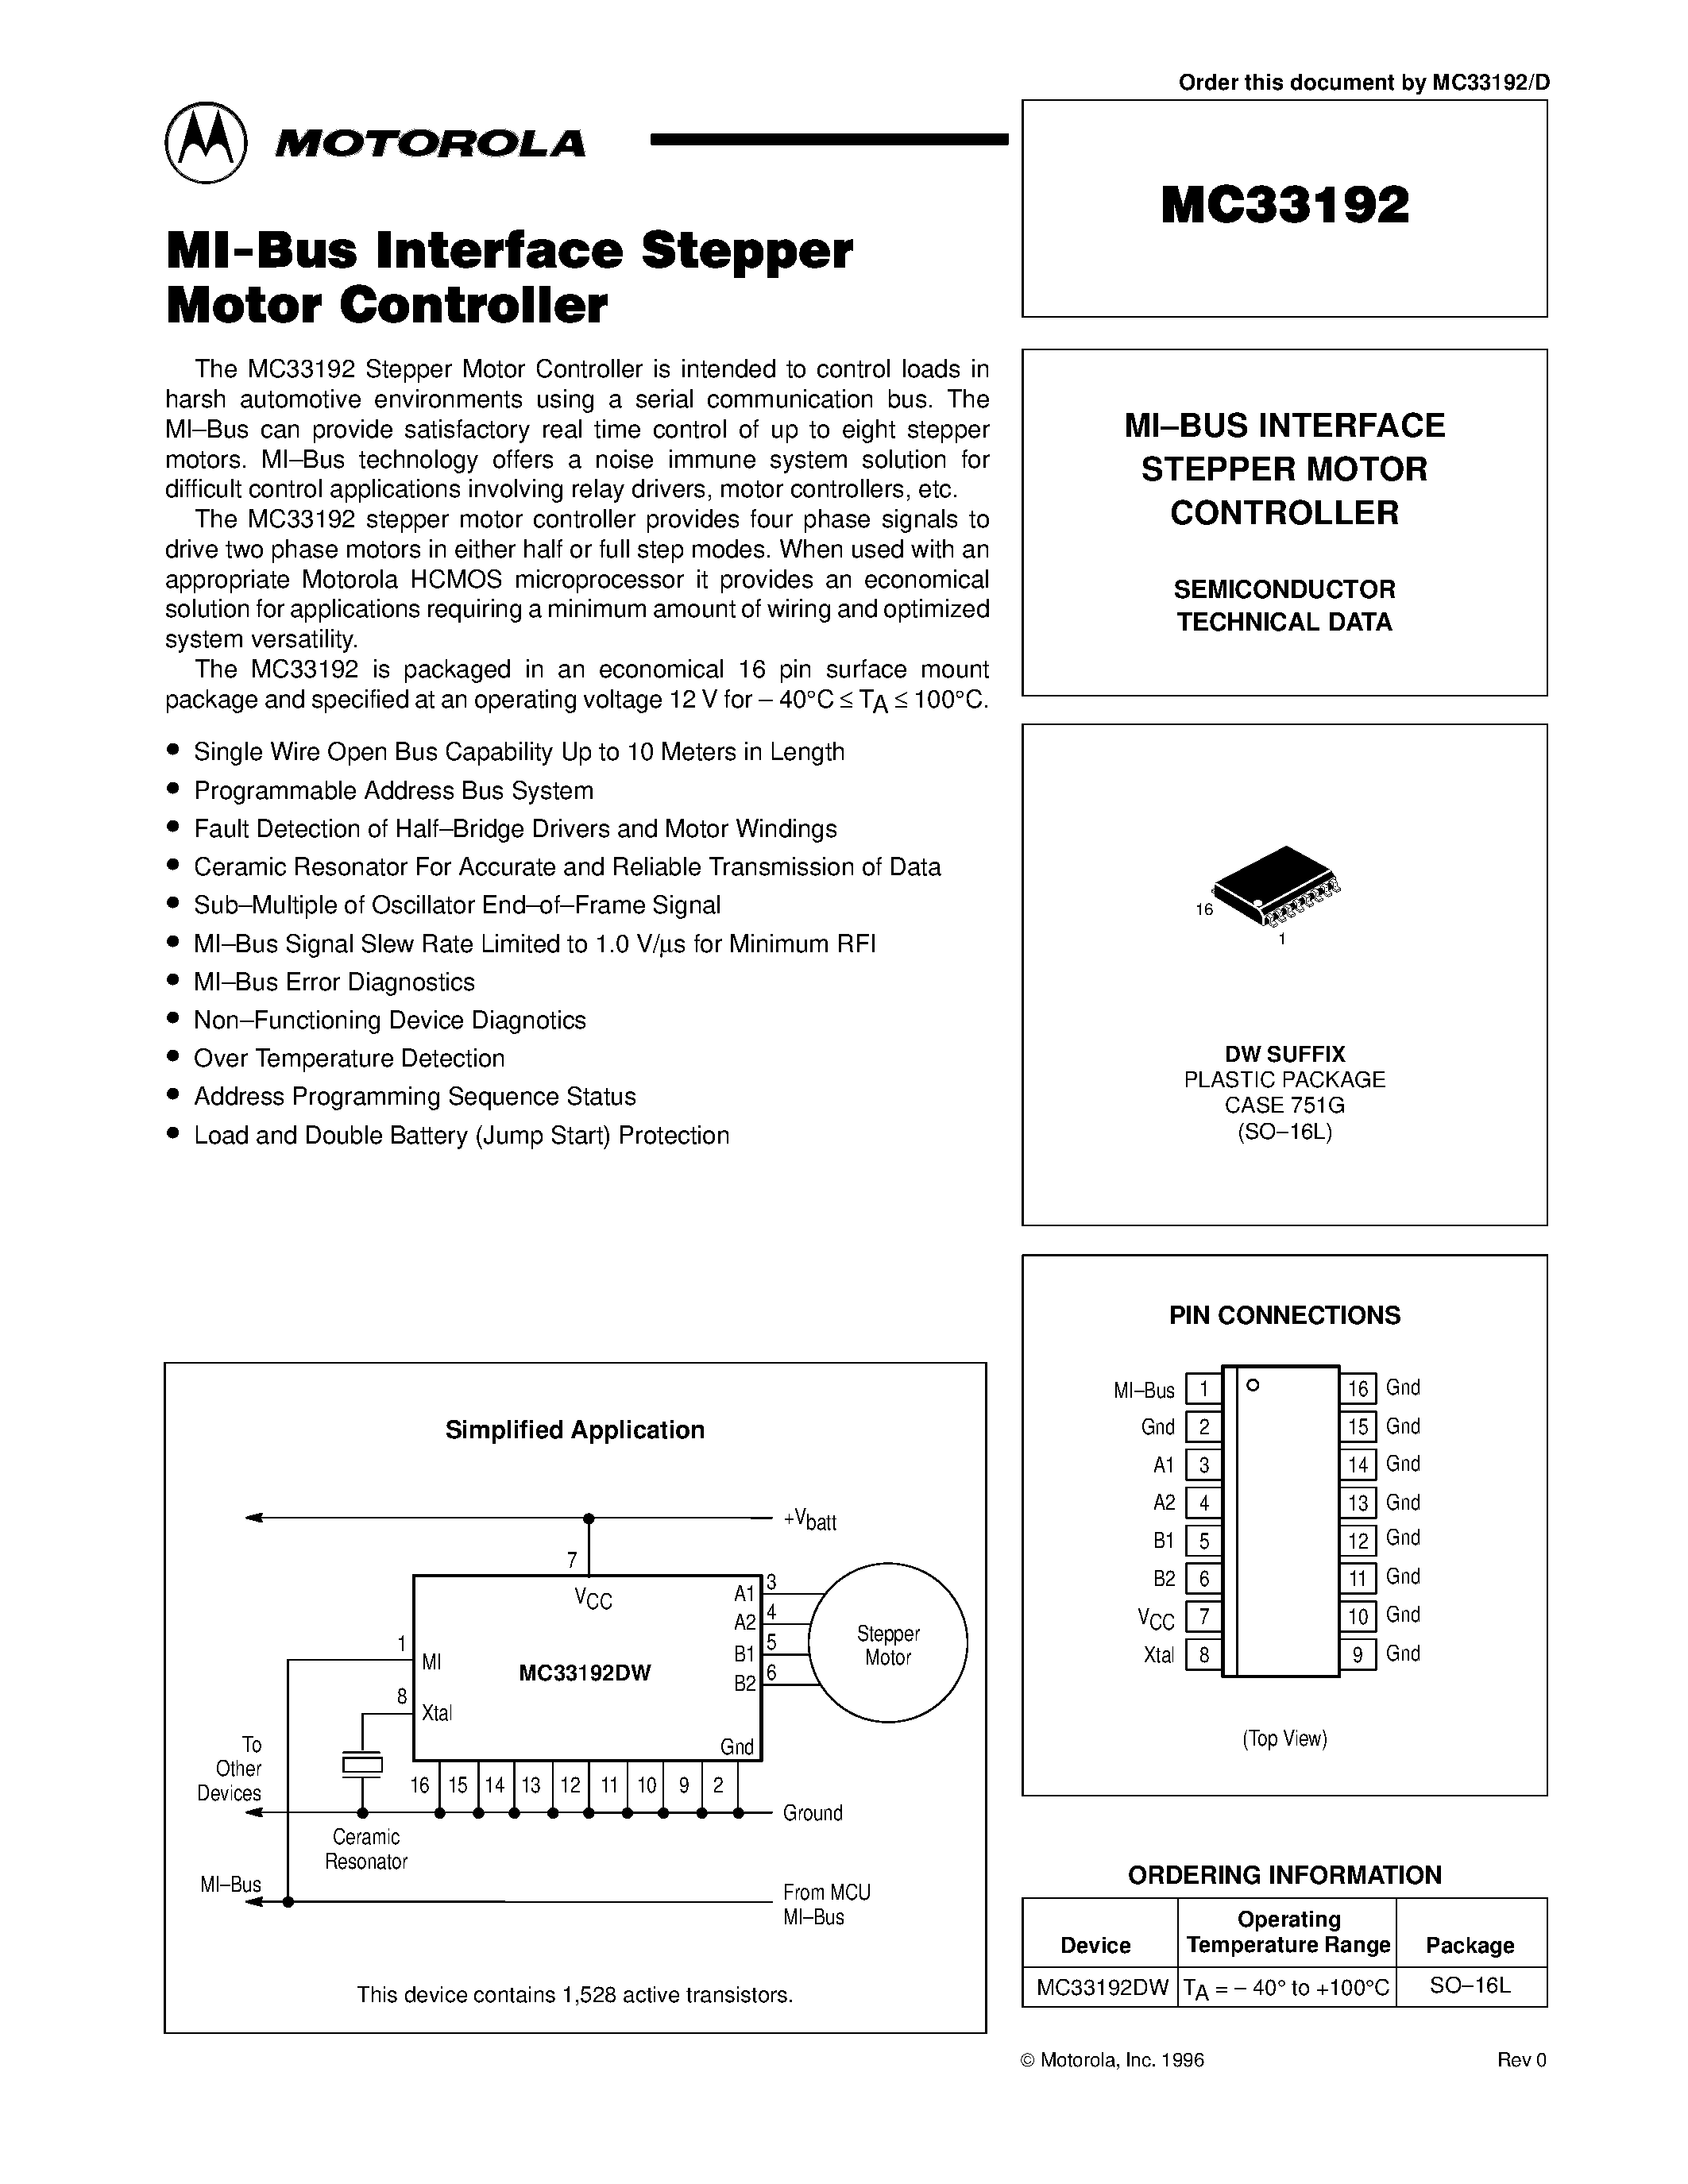 Даташит MC33192 - MI-BUS INTERFACE STEPPER MOTOR CONTROLLER страница 1